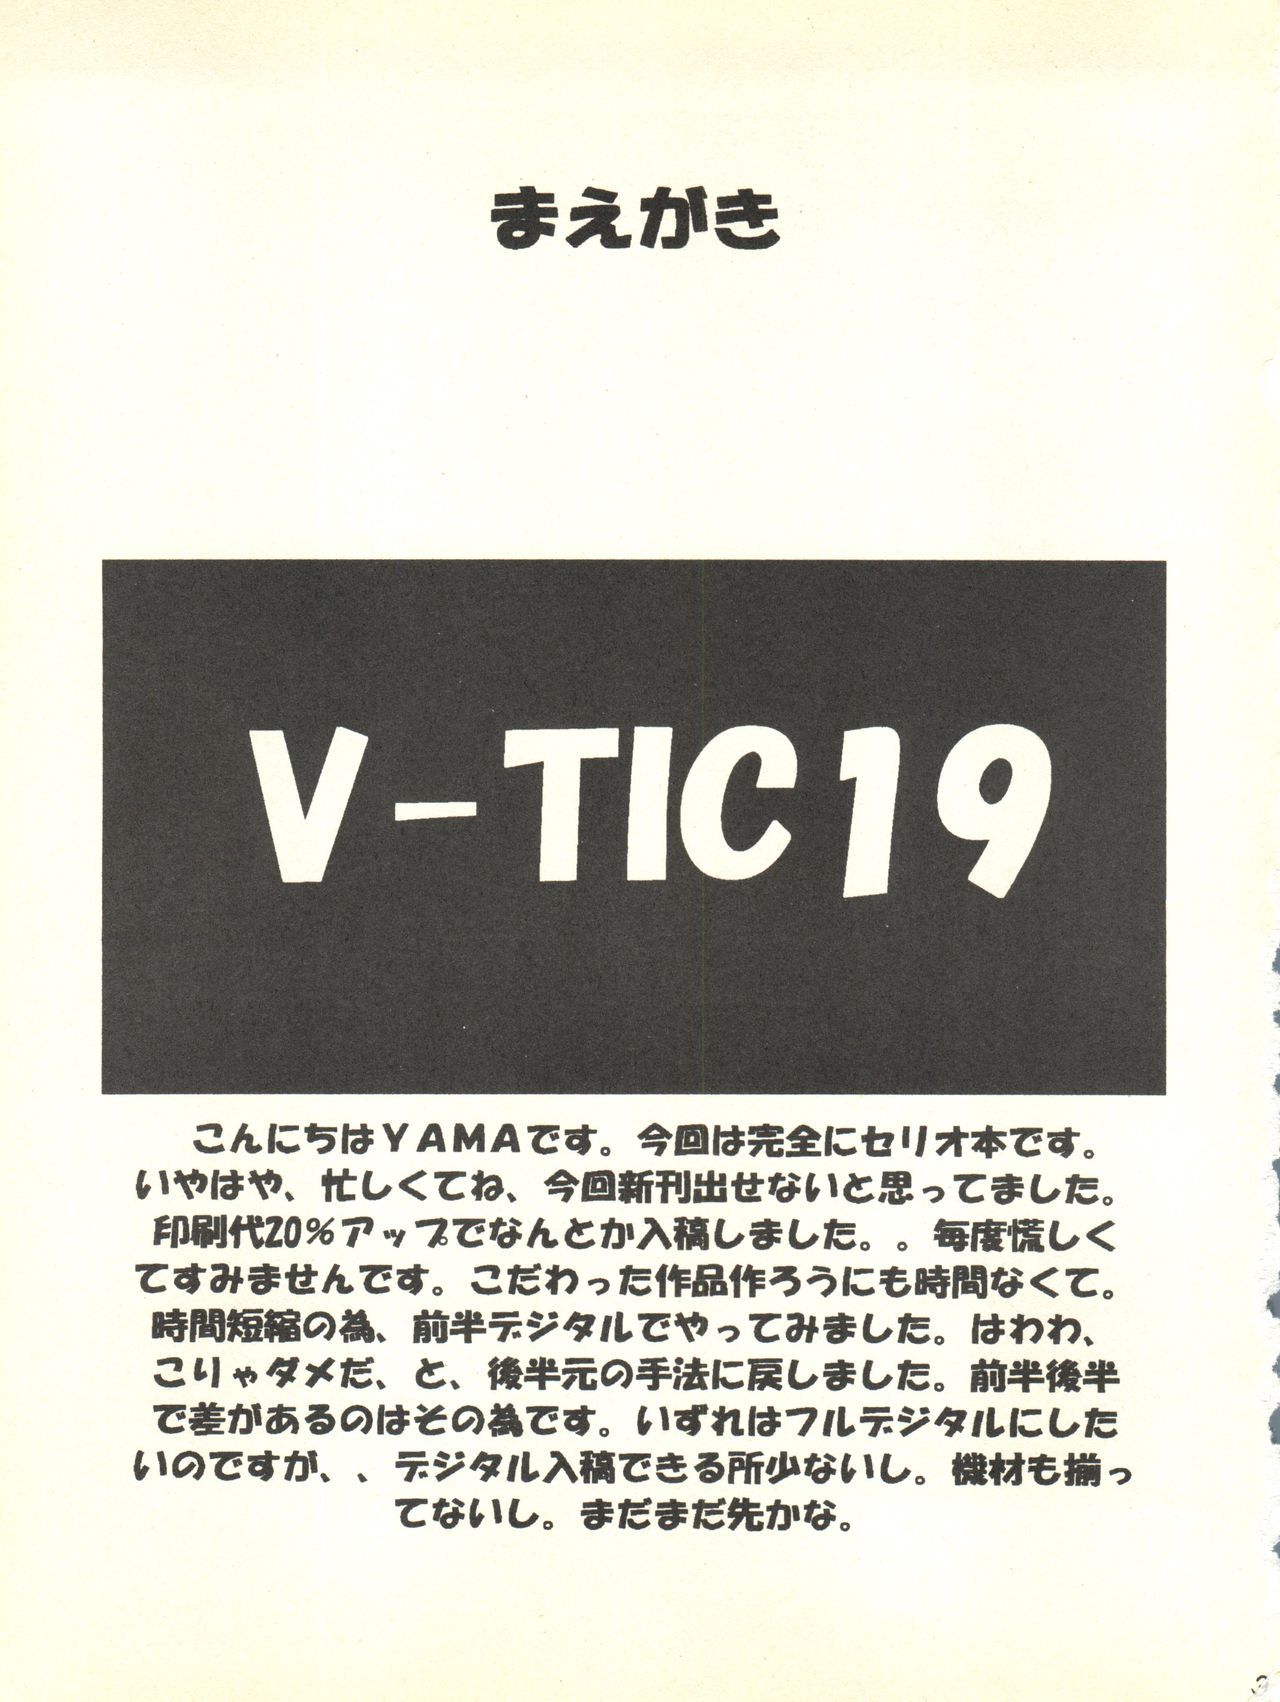 V-TIC 19